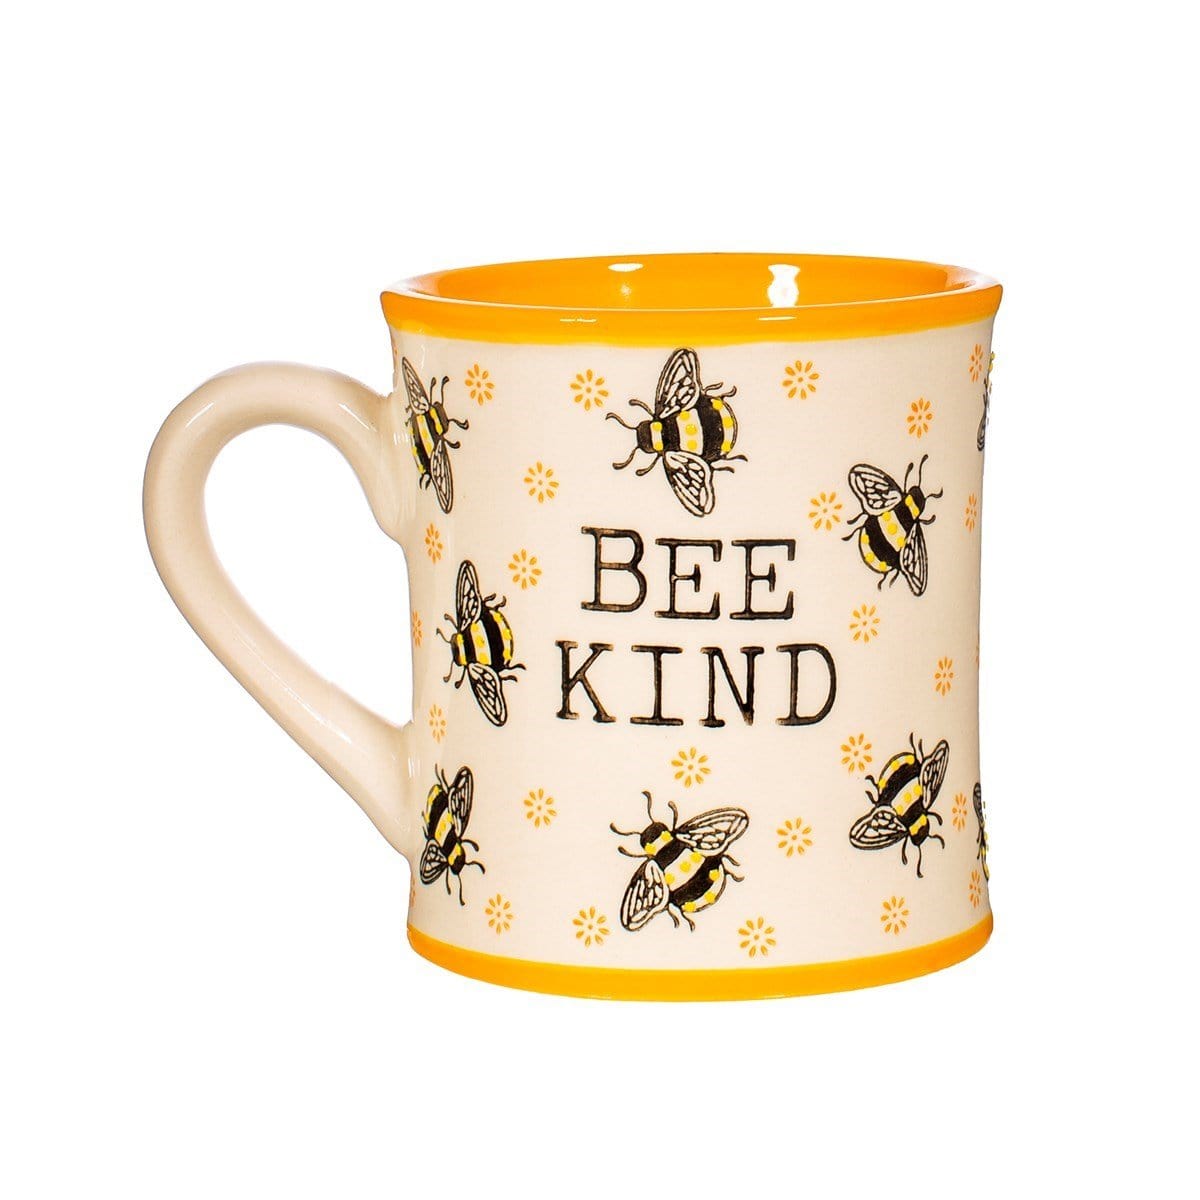 Bee Kind Mug - Kaftan direct